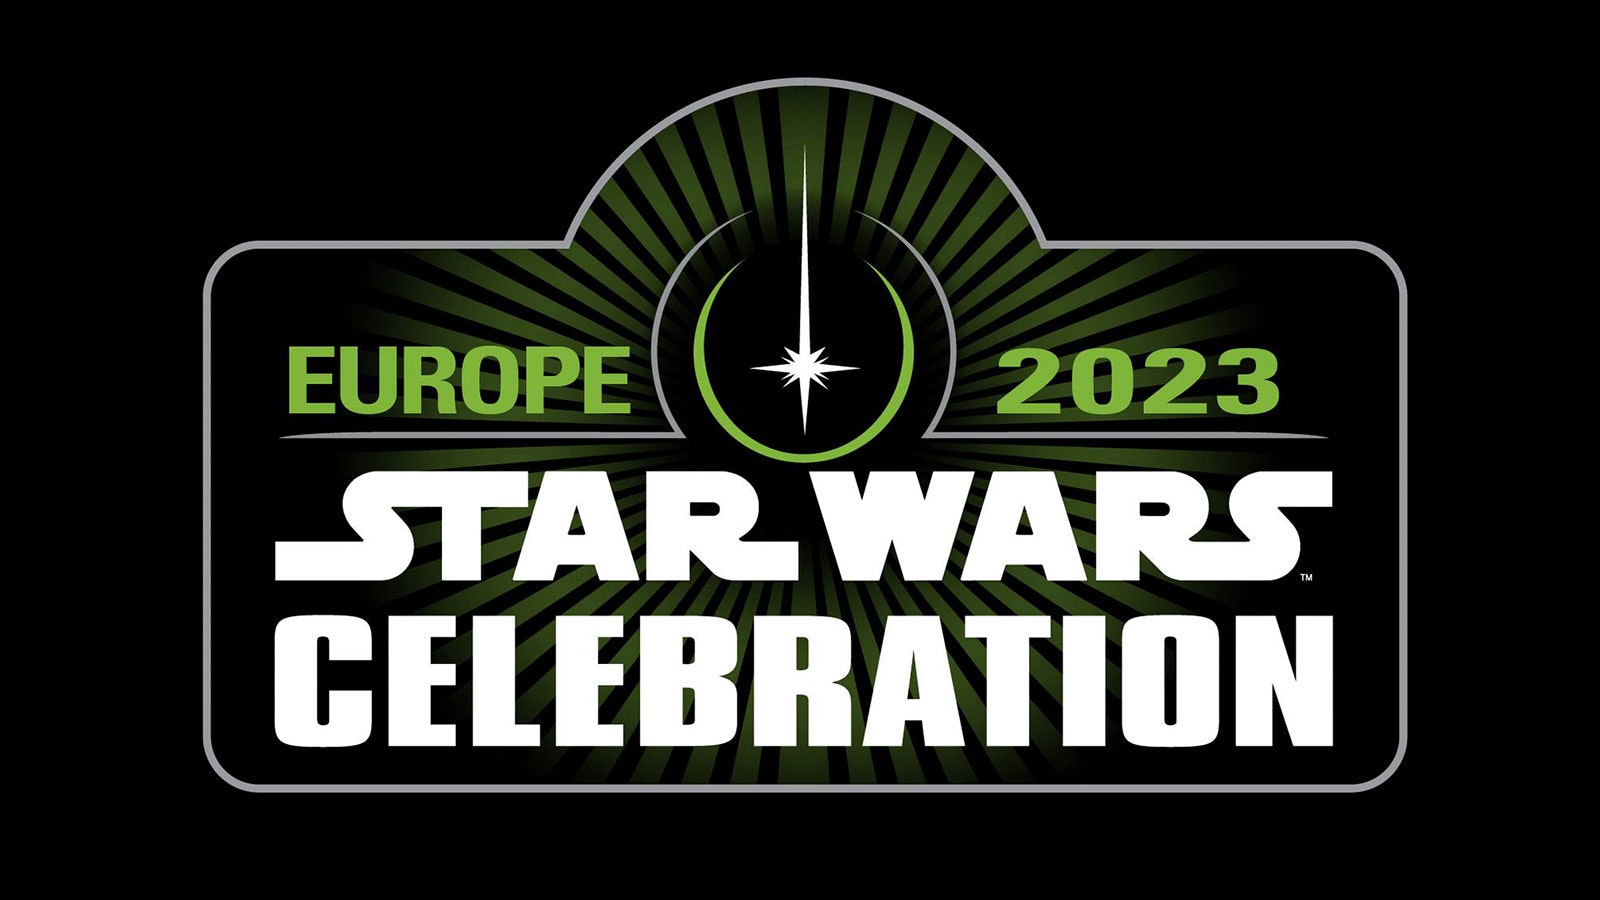 Star Wars Celebration” trouxe novidades